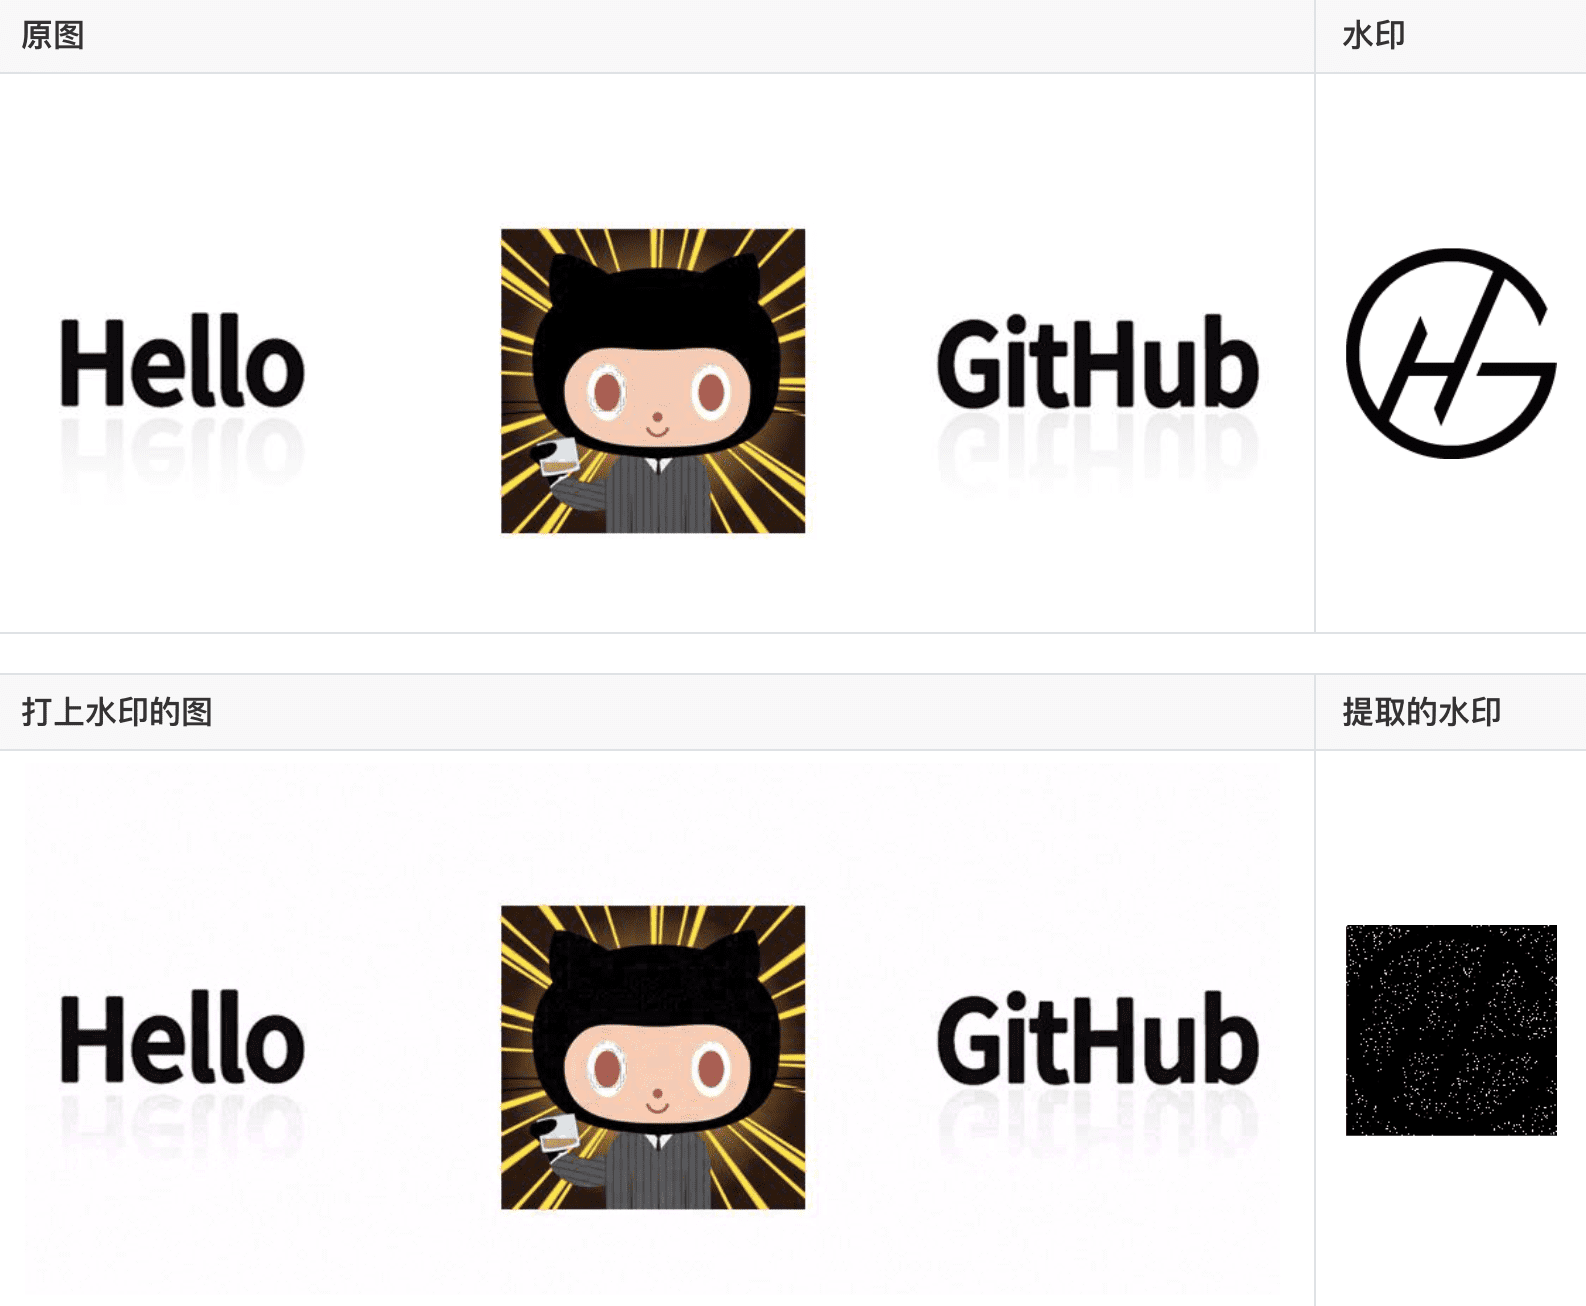 更新啦！第 59 期《HelloGitHub》开源月刊